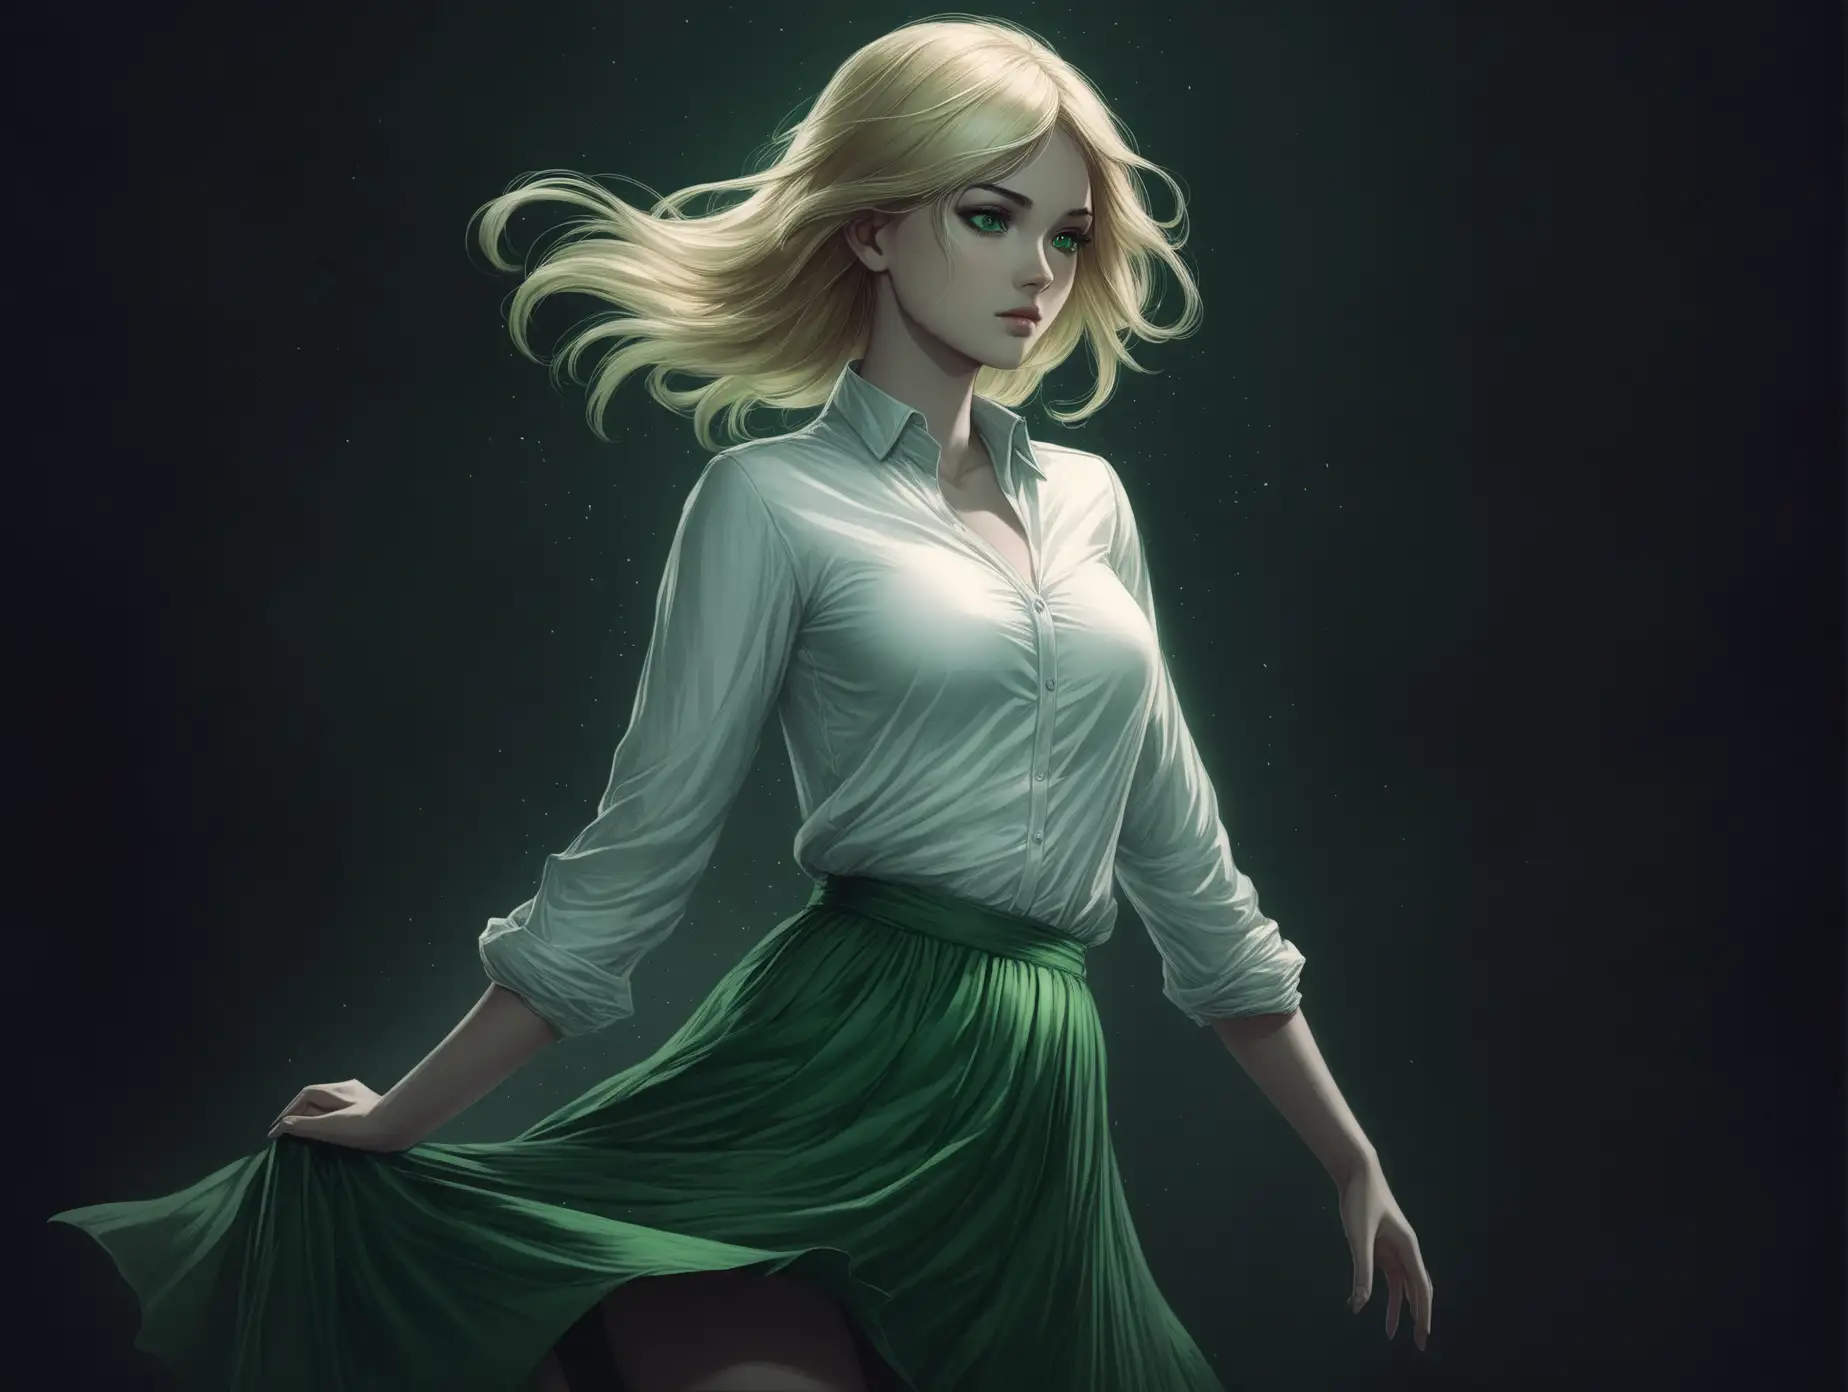 Anime-Girl-in-Dark-Fantasy-Setting-with-Green-Skirt-and-White-Shirt